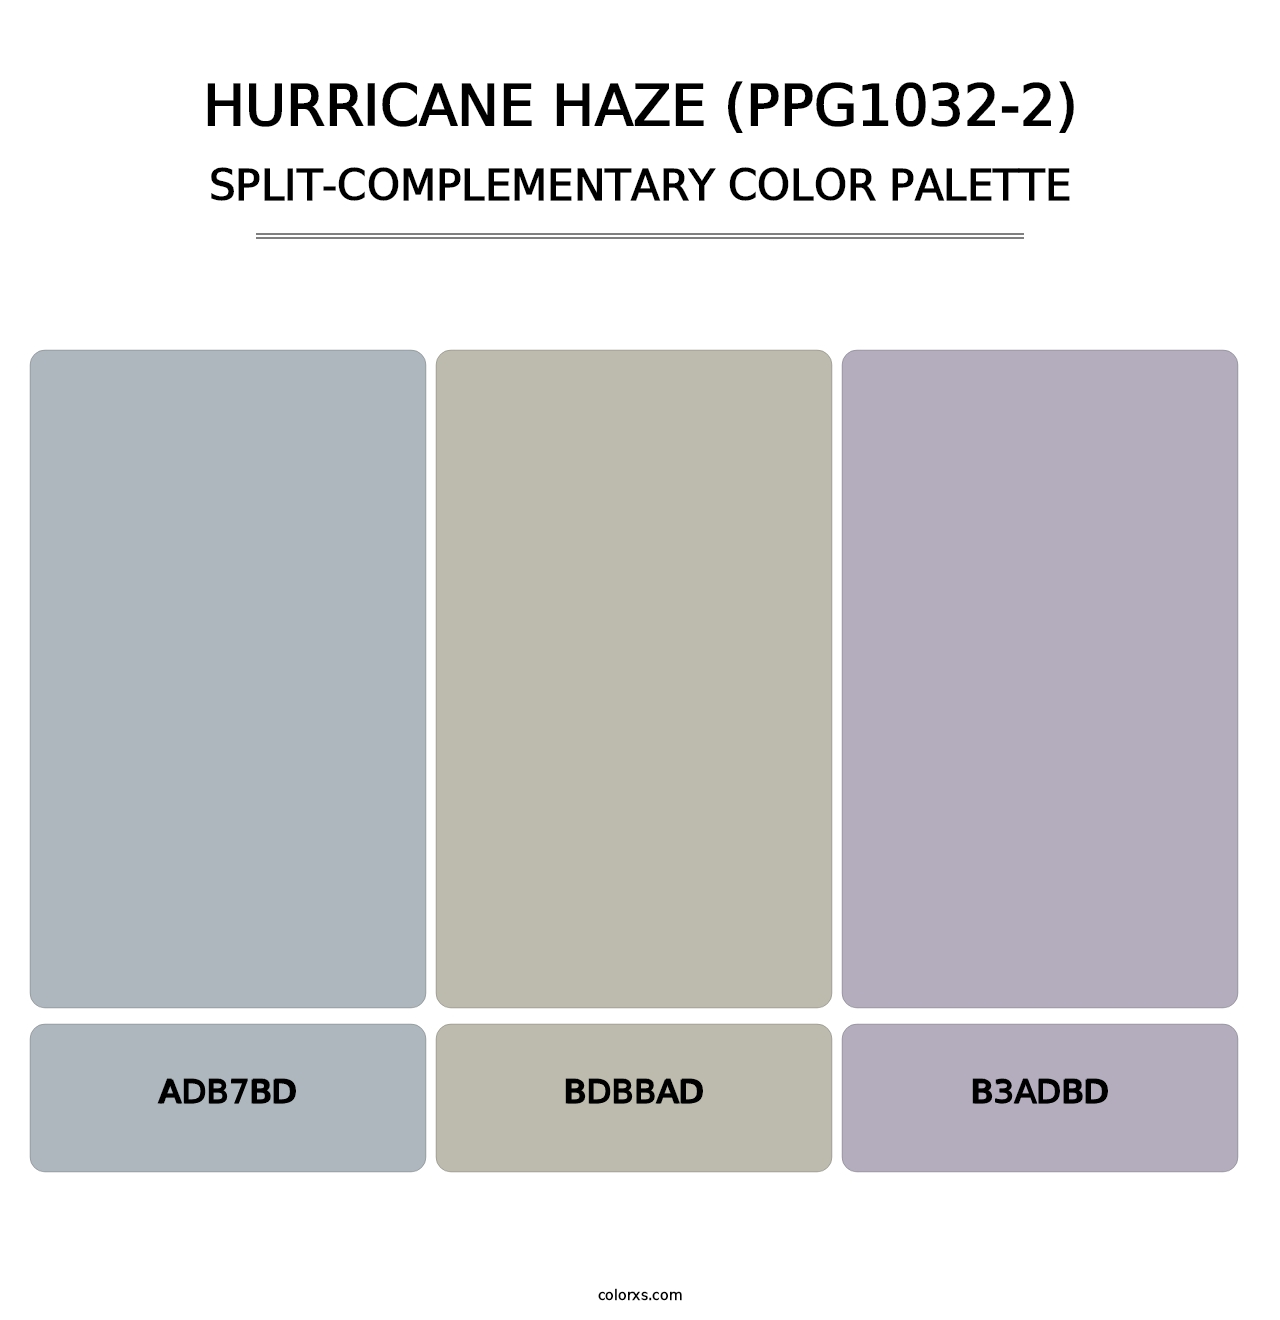 Hurricane Haze (PPG1032-2) - Split-Complementary Color Palette